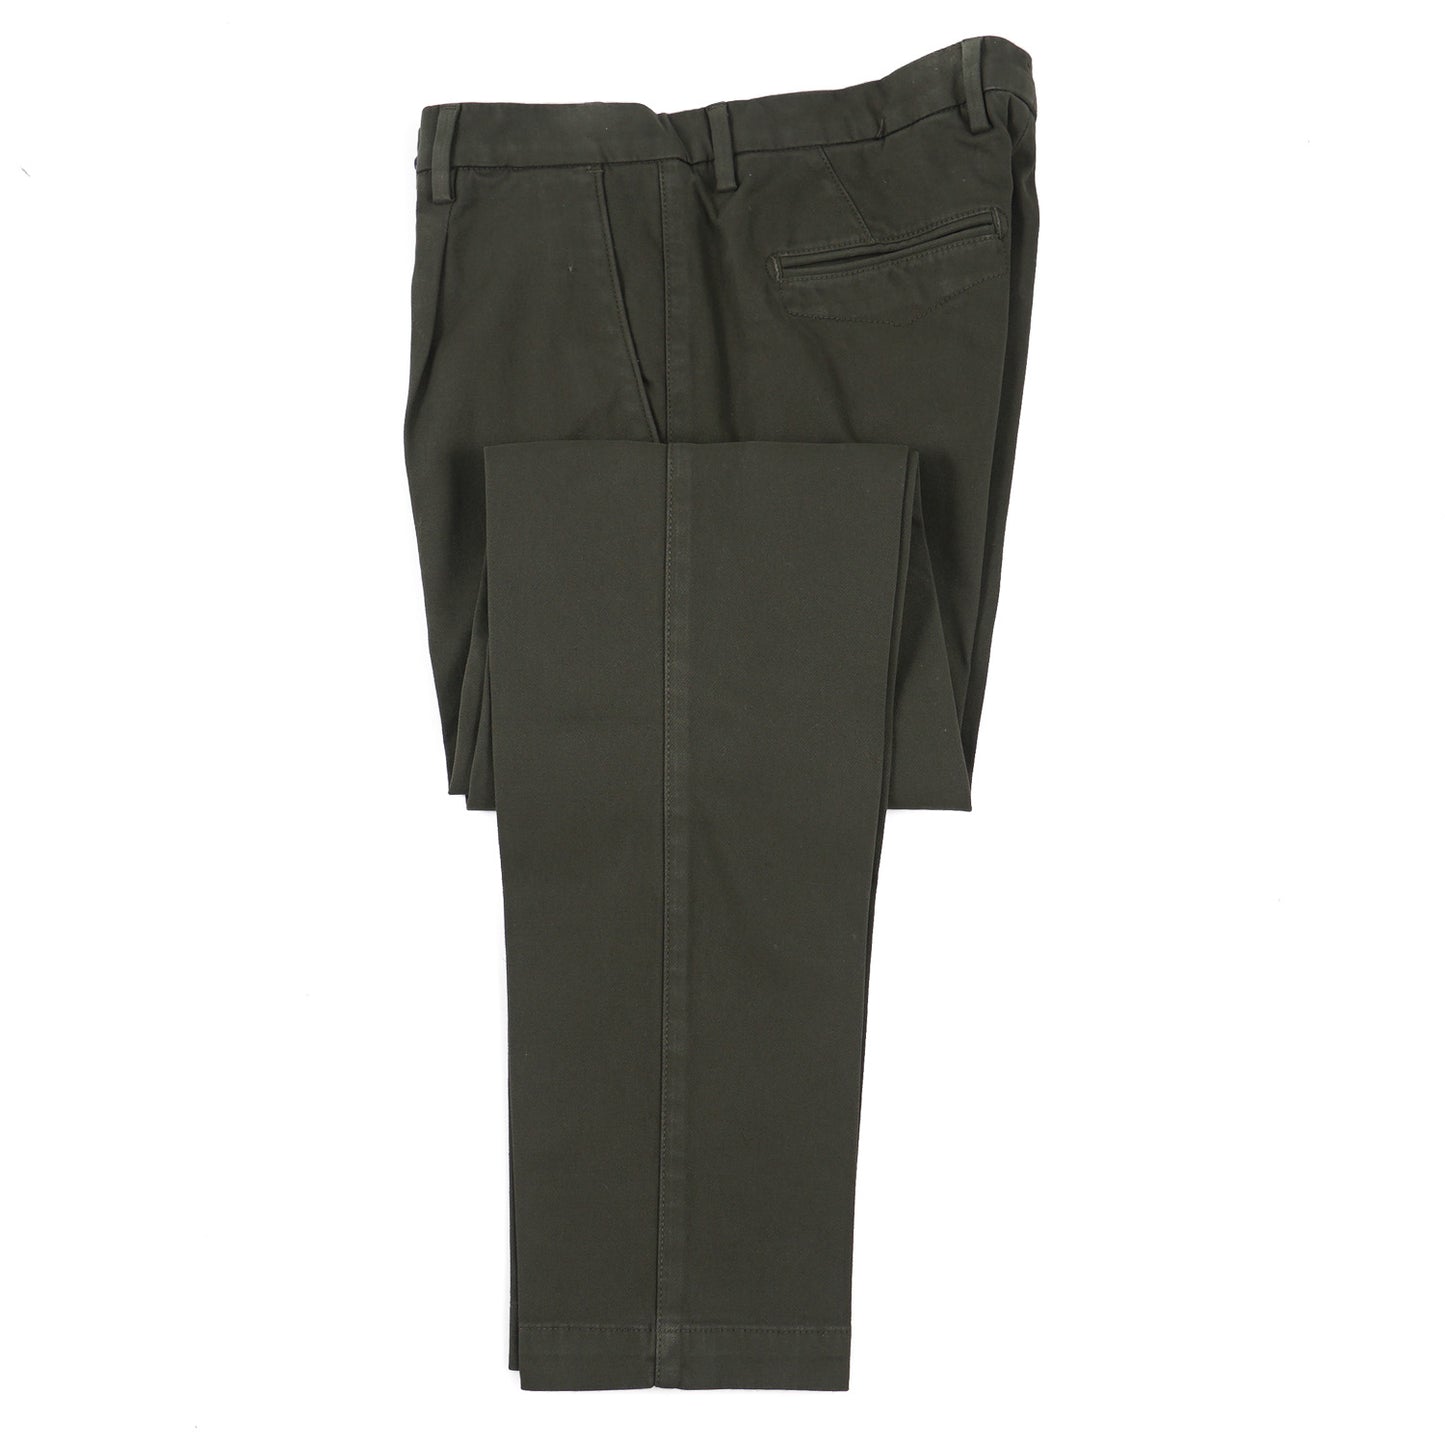 Luigi Borrelli Twill Cotton Pants with Cargo Pockets - Top Shelf Apparel